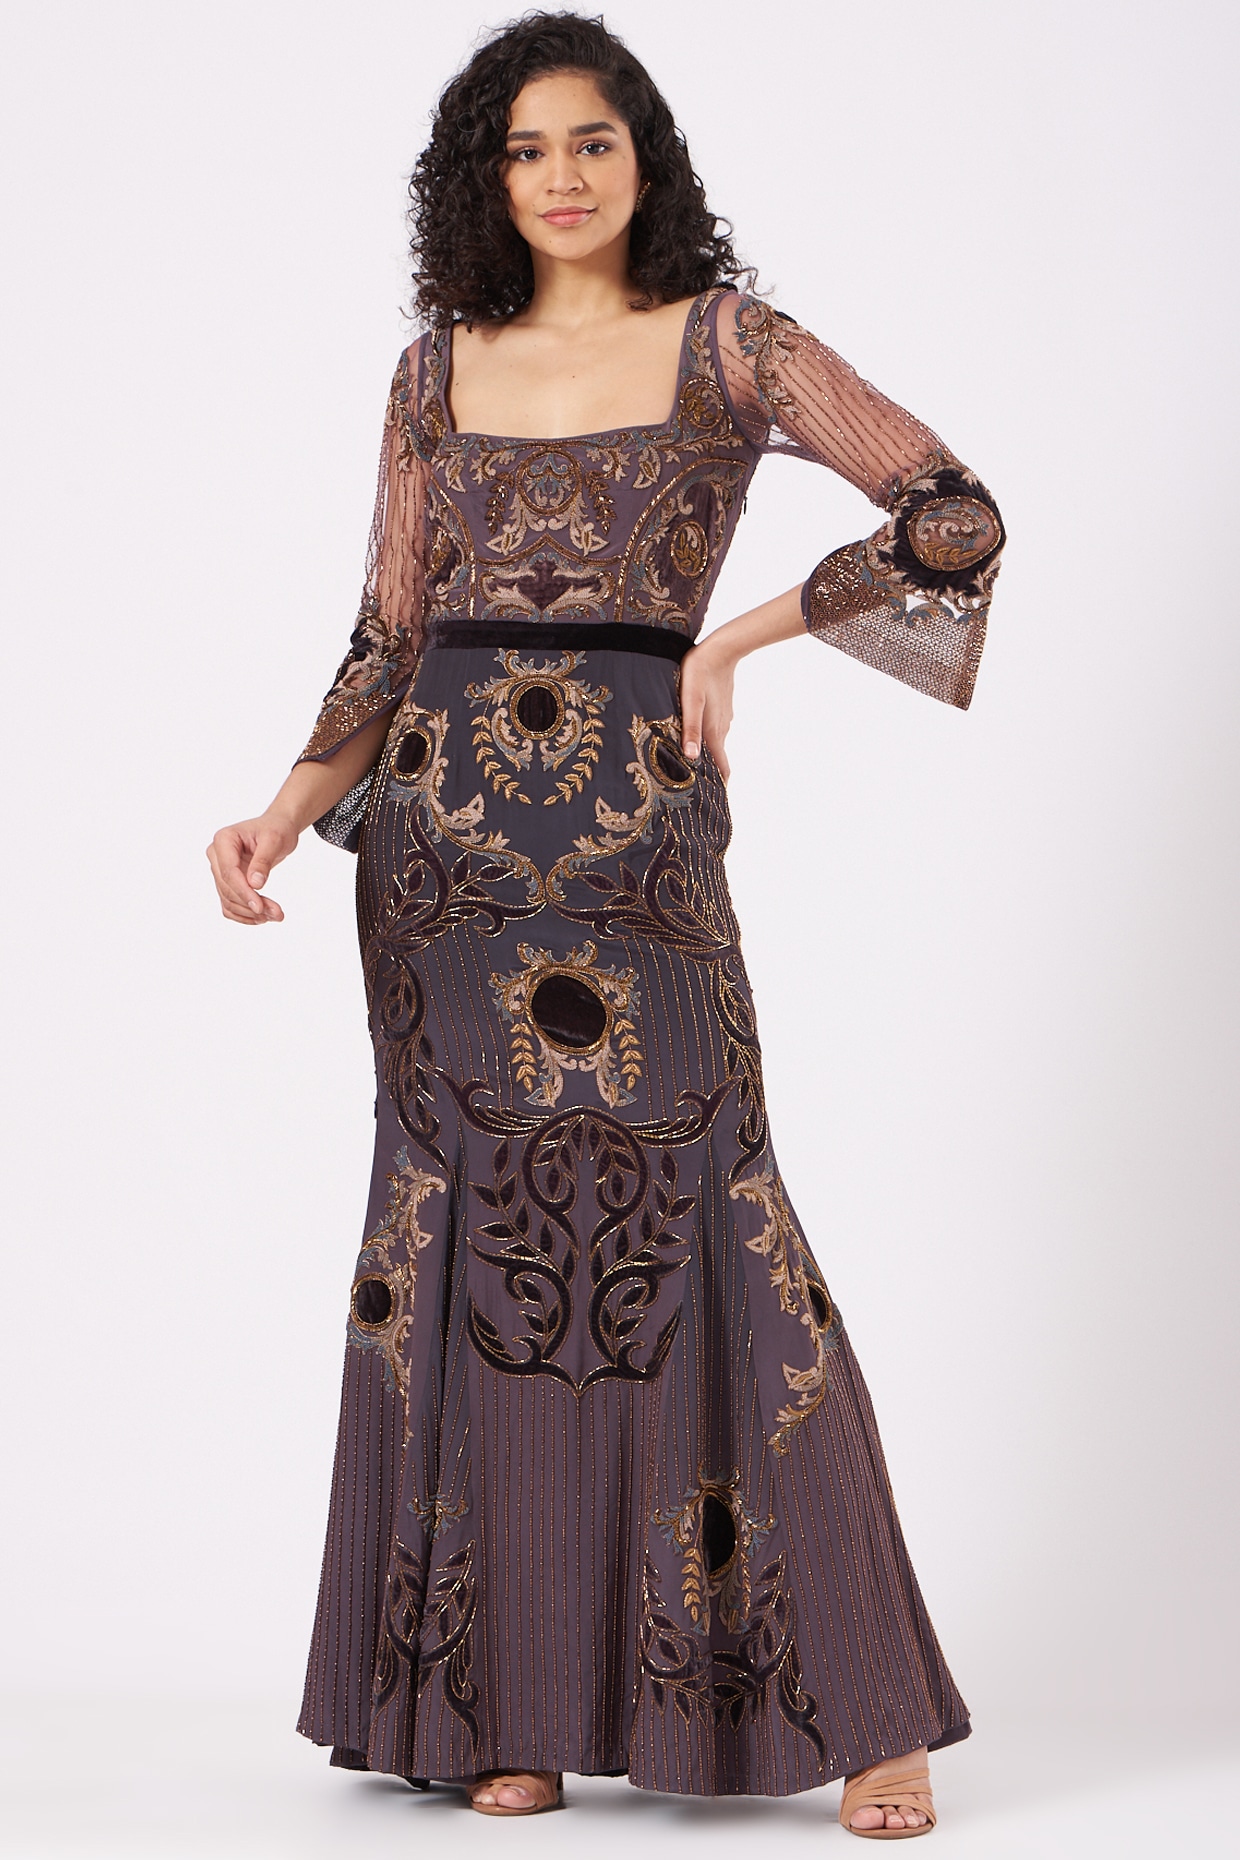 Deepika Padukone's Portfolio Pics | Fish cut gown, Velvet dress designs,  Indian fashion saree